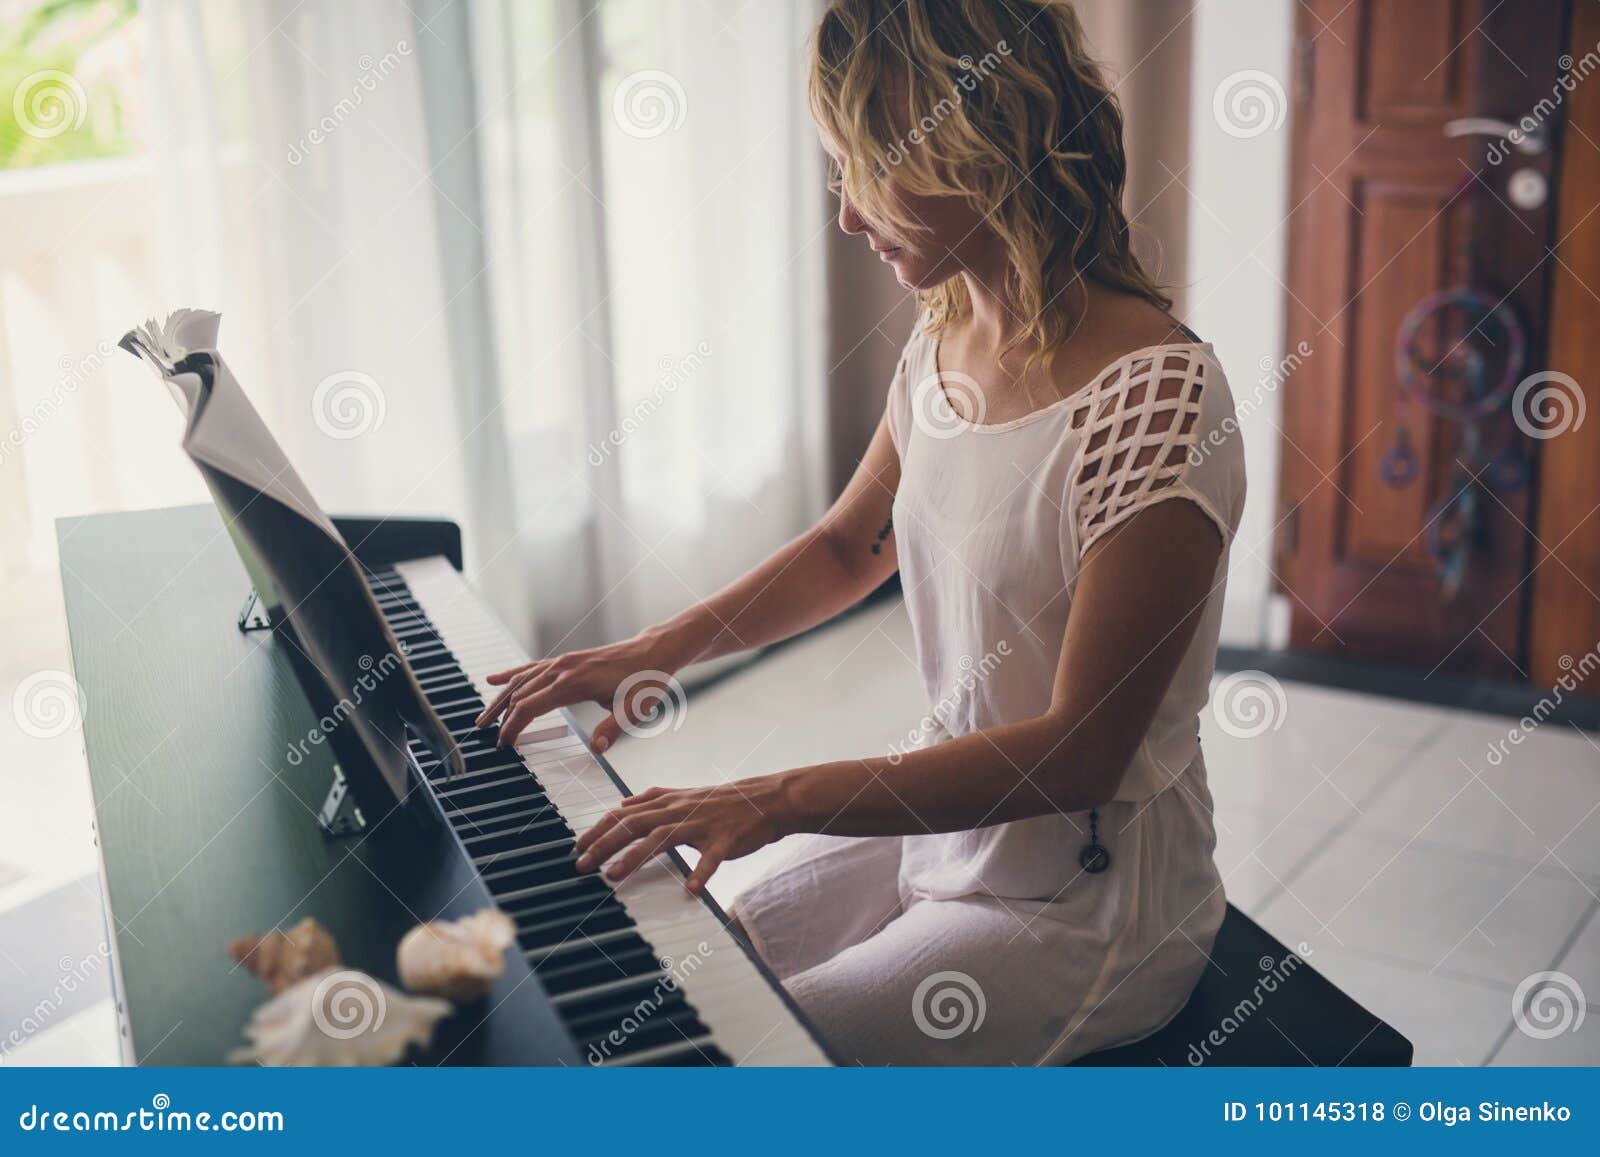 She play piano well. Человек за фортепиано. Человек за роялем. Женщина и пианино. Девушка играет на пианино.